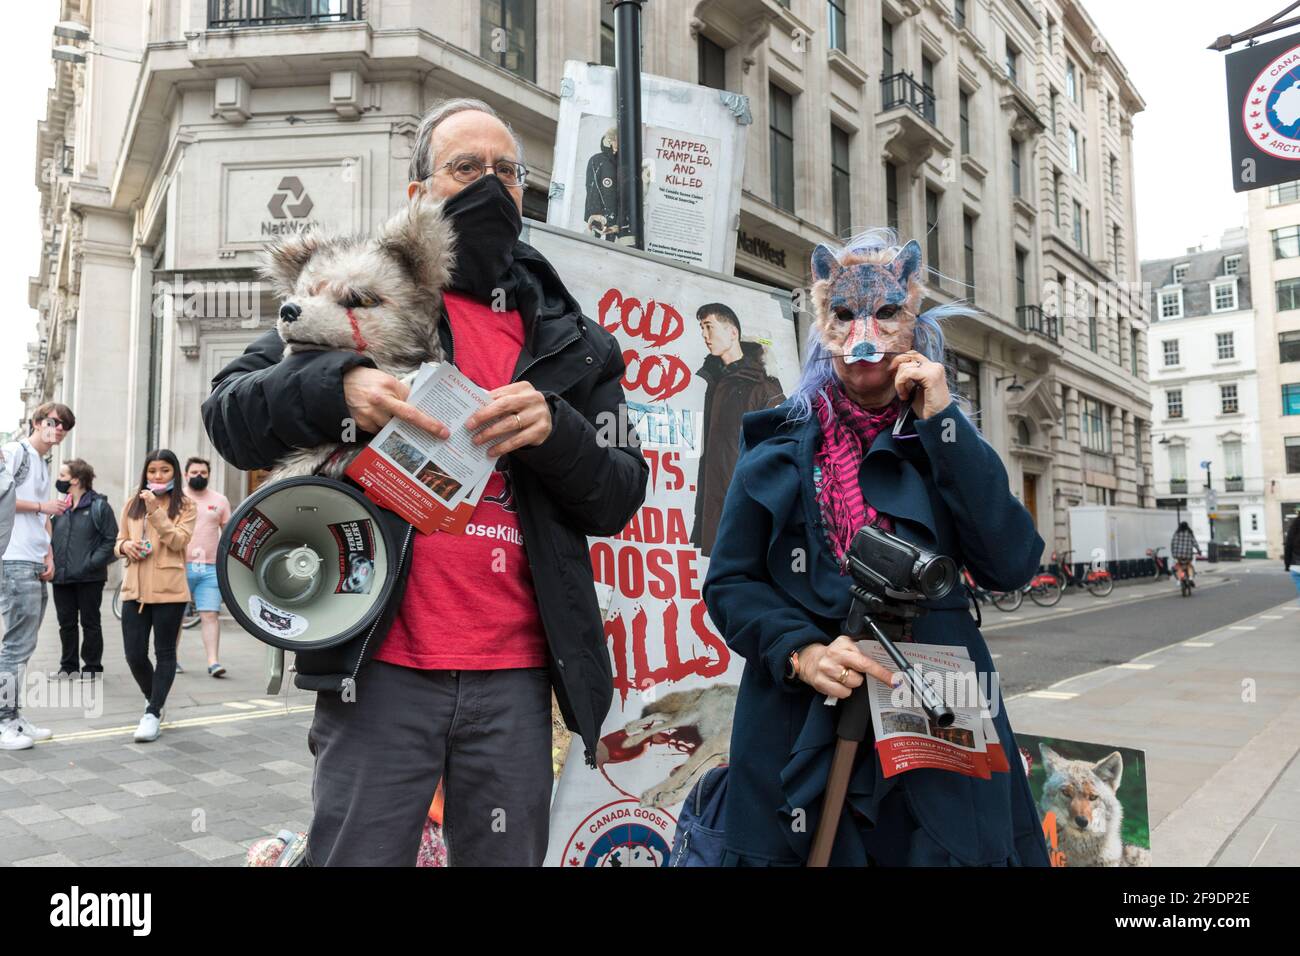 London, UK. 18th Apr, 2021. An activist seen holding a megaphone during ...